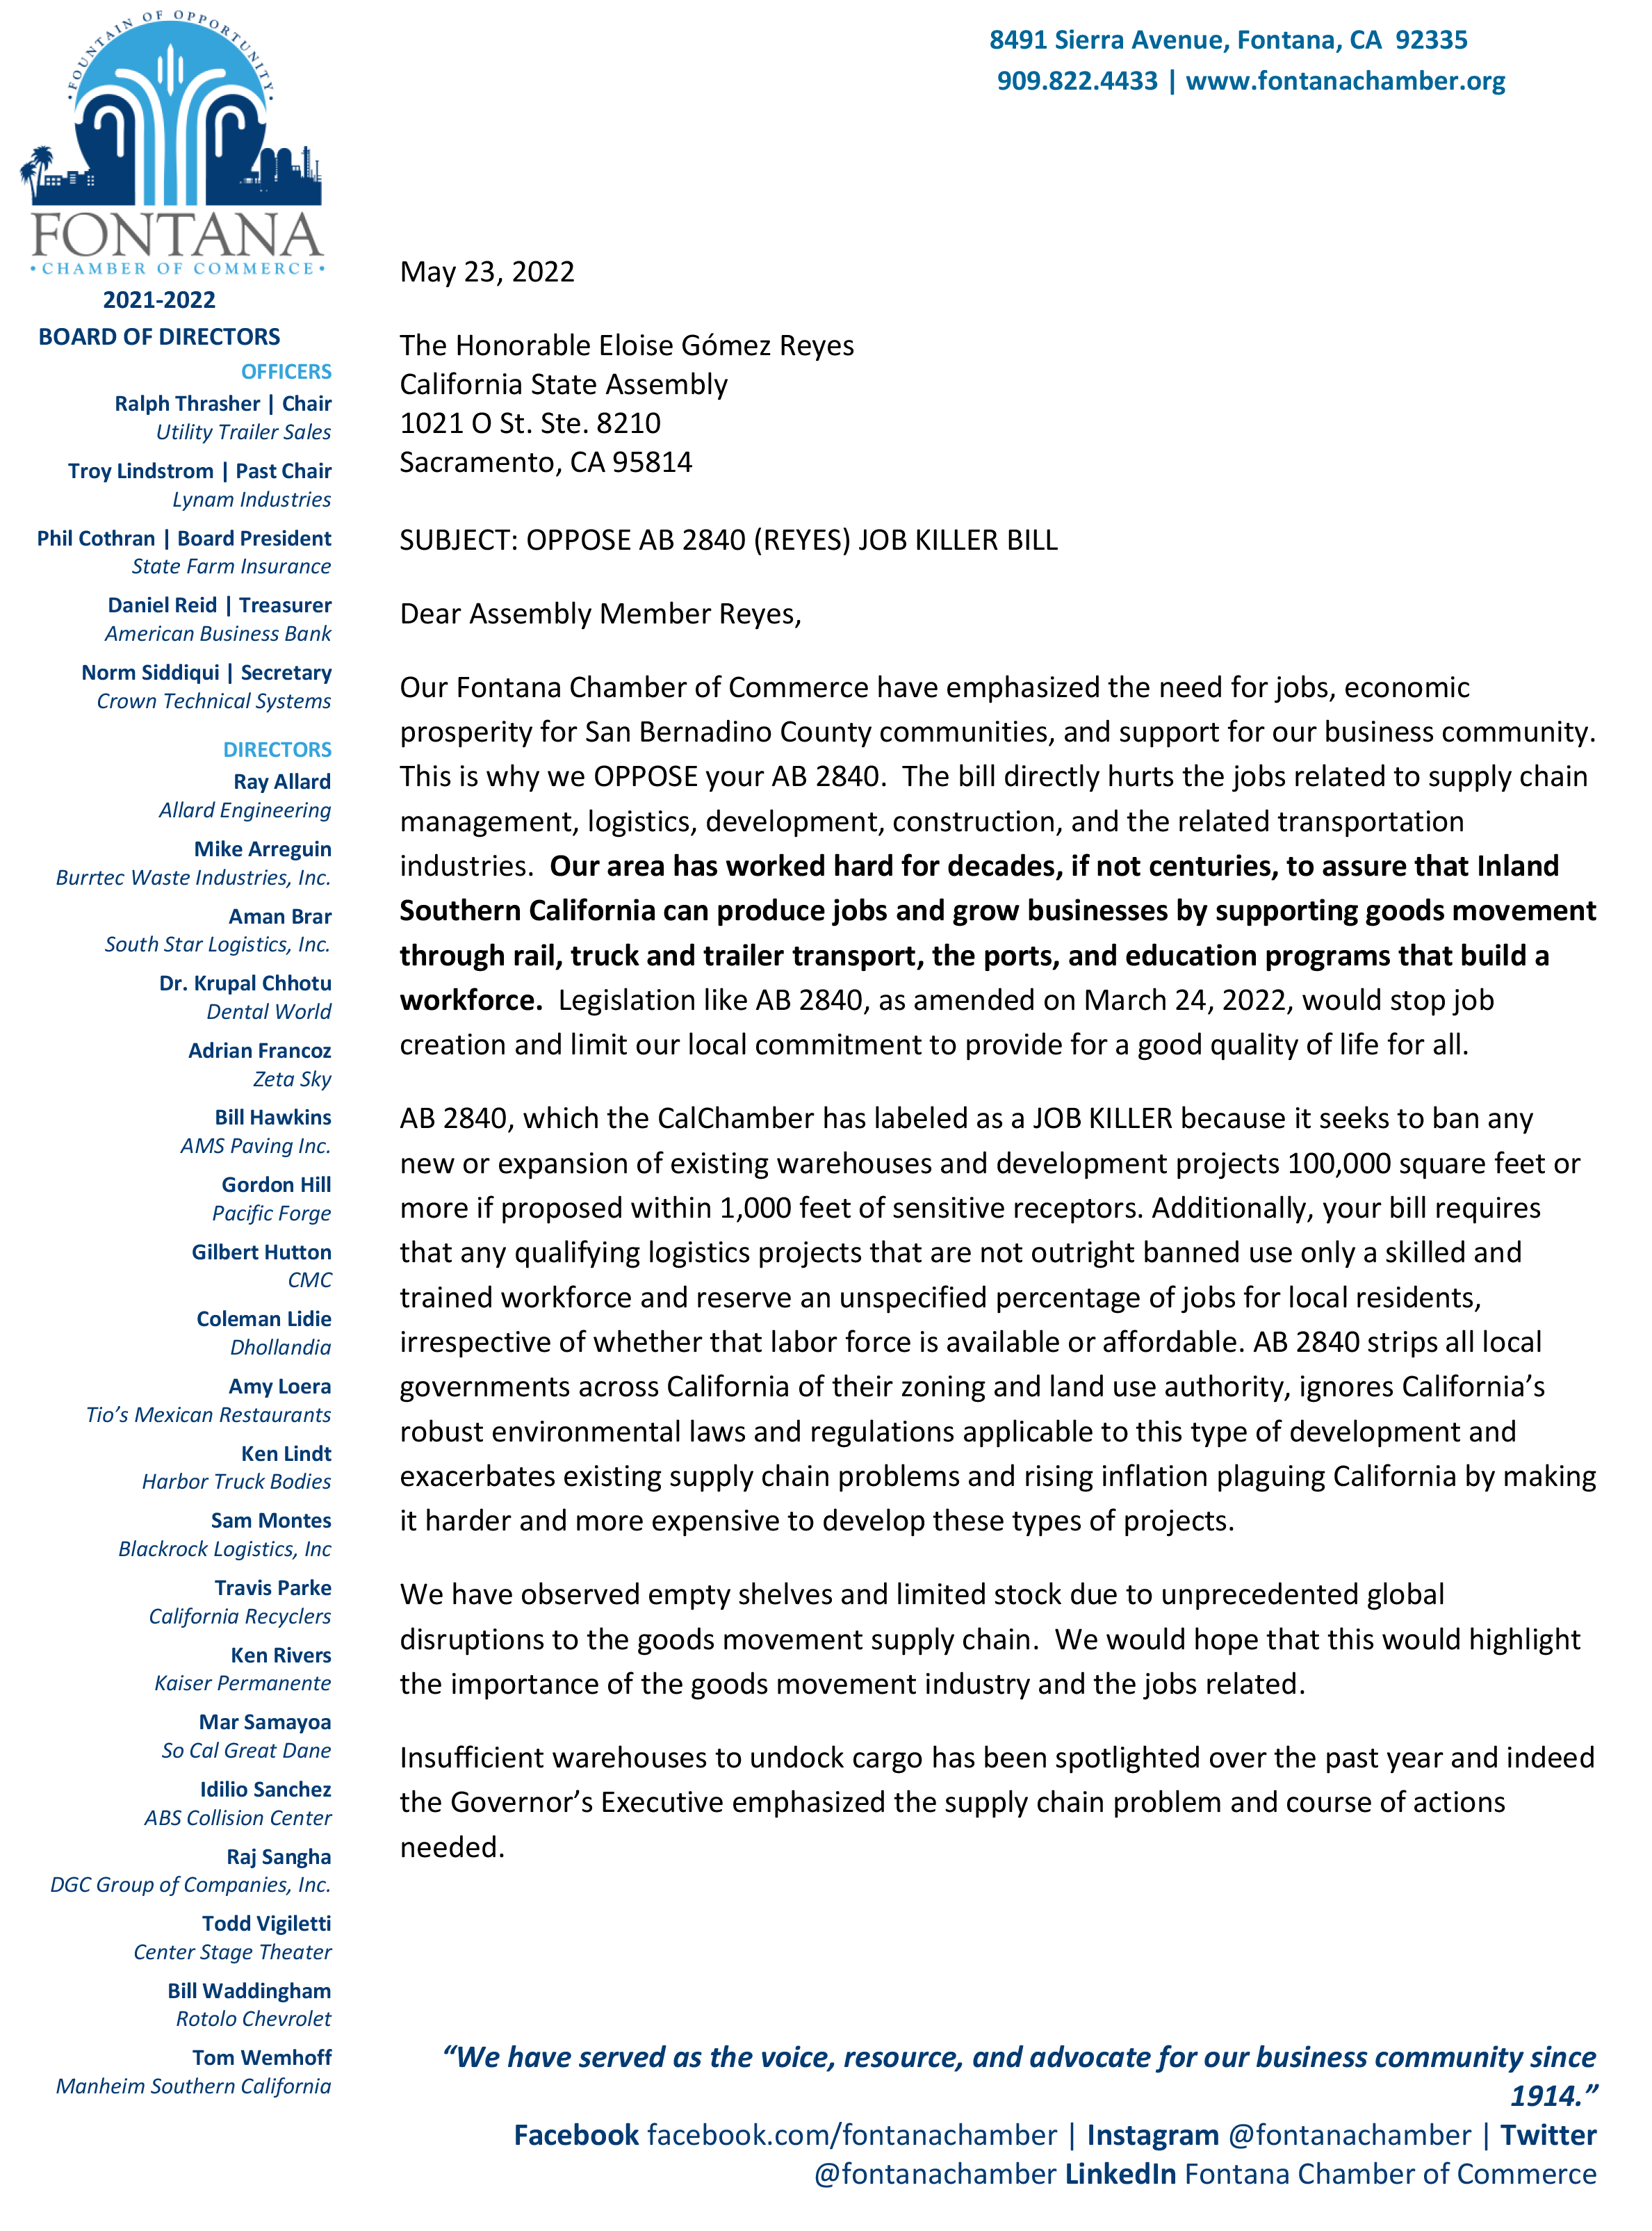 Letter to oppose AB 2840 Gomez Reyes